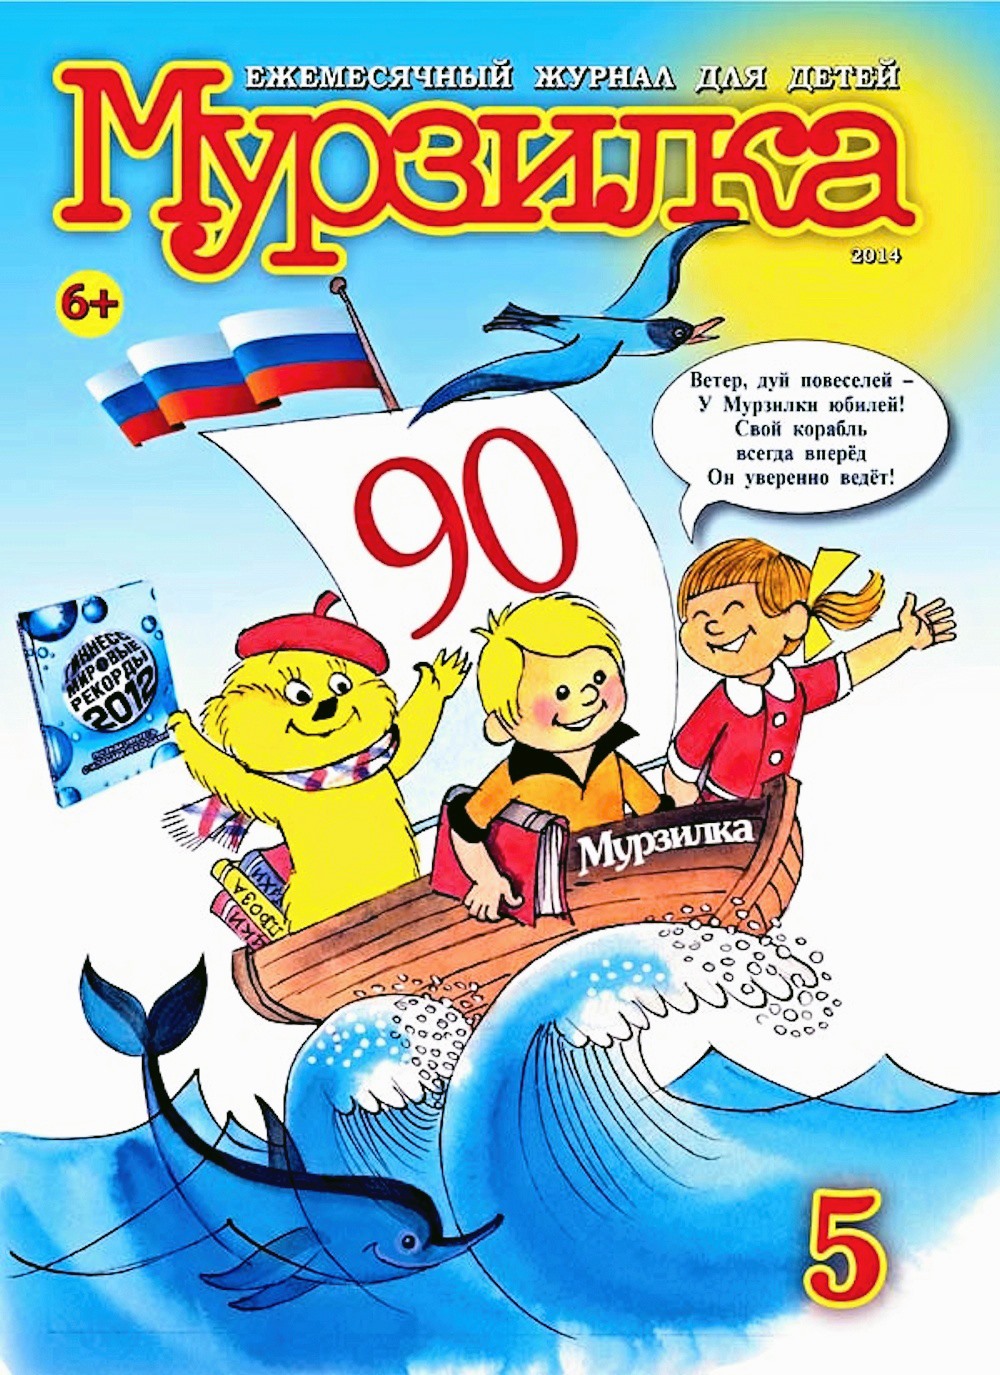 00-murzilka-magazine-russia-19-05-14